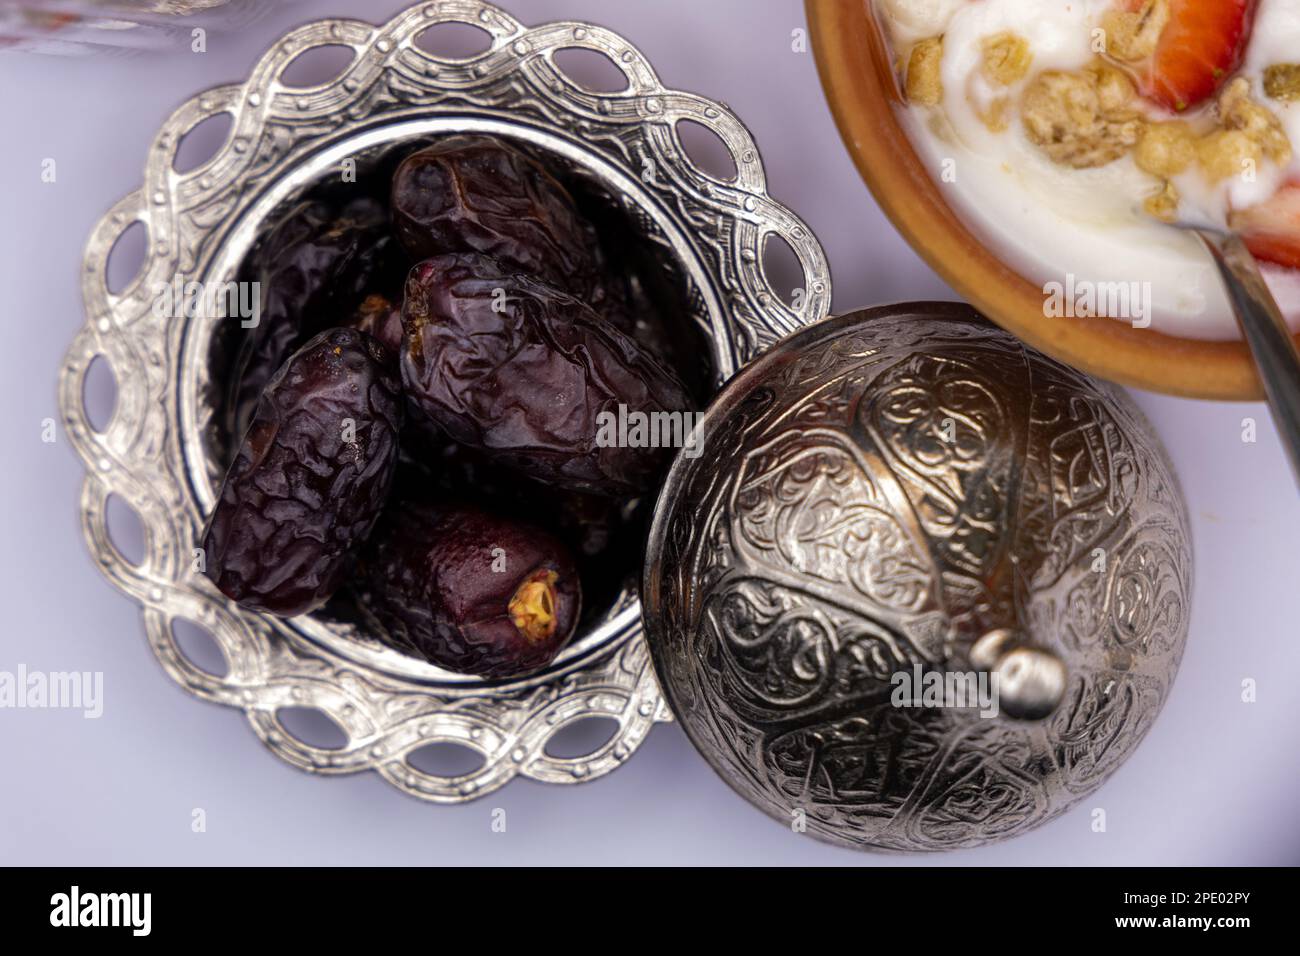 Fechas - Ramadán Food Foto de stock